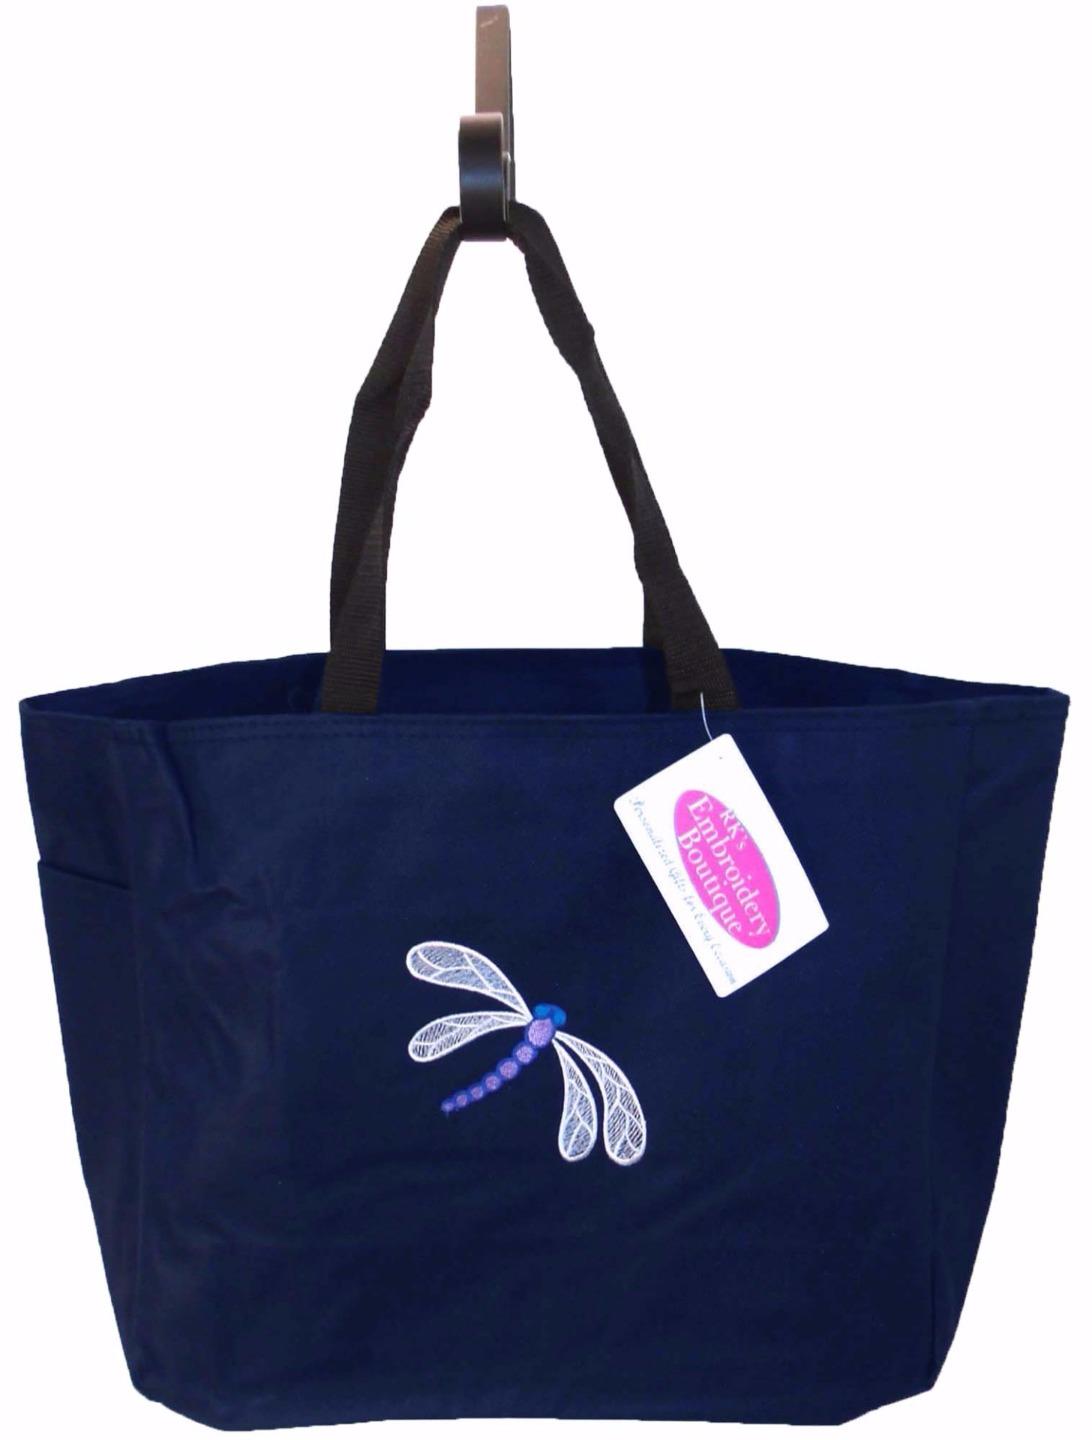 Intricate Dragonfly Beach Bag Monogram Custom Embroidered Tote + Free Name NWT